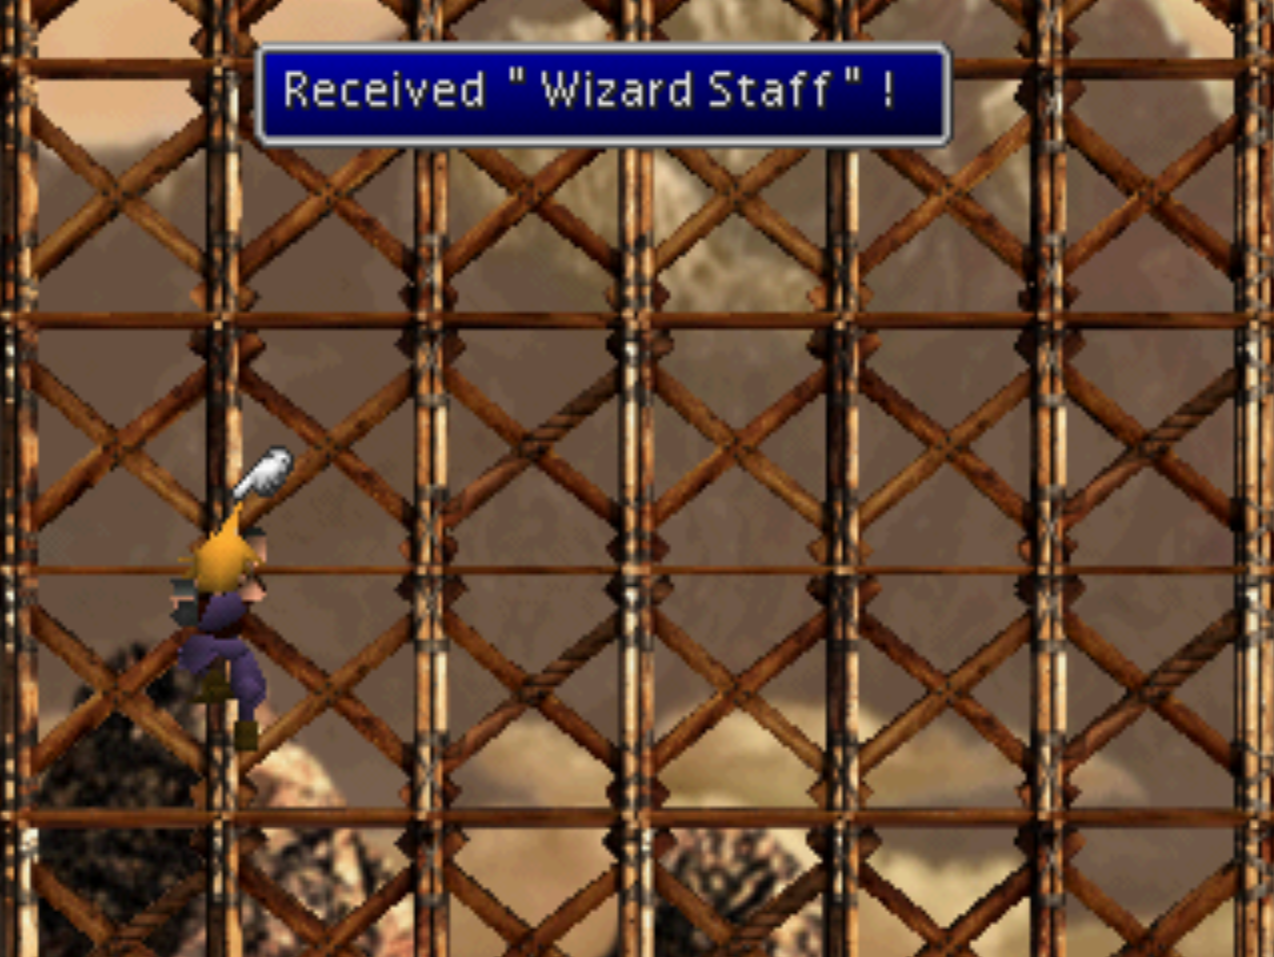 Wizard Staff Acquired